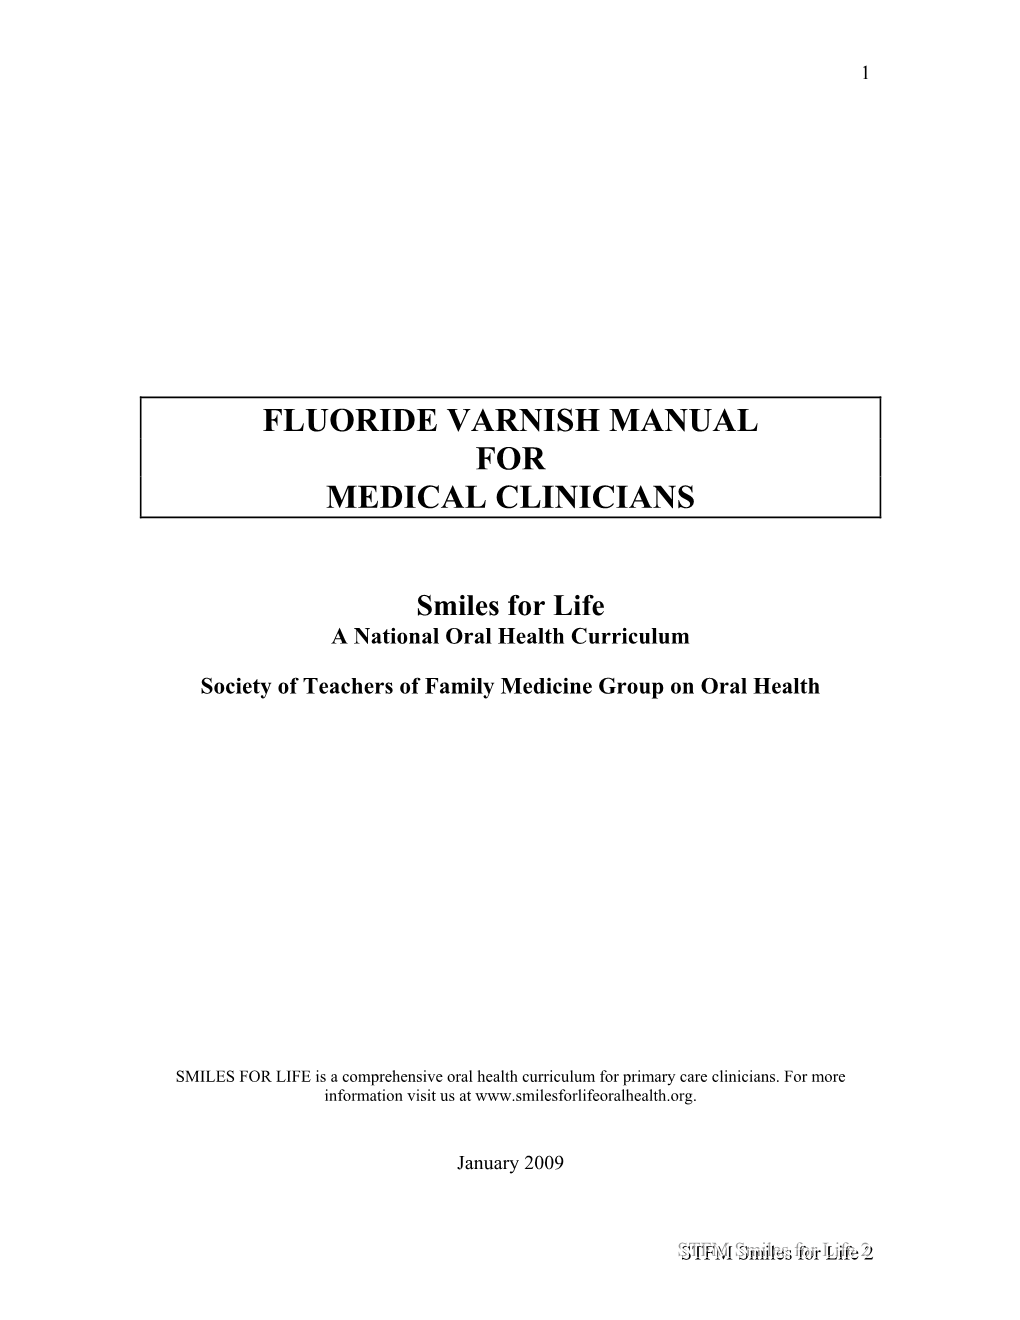 Fluoride Varnish Manual for Medical Clinicians